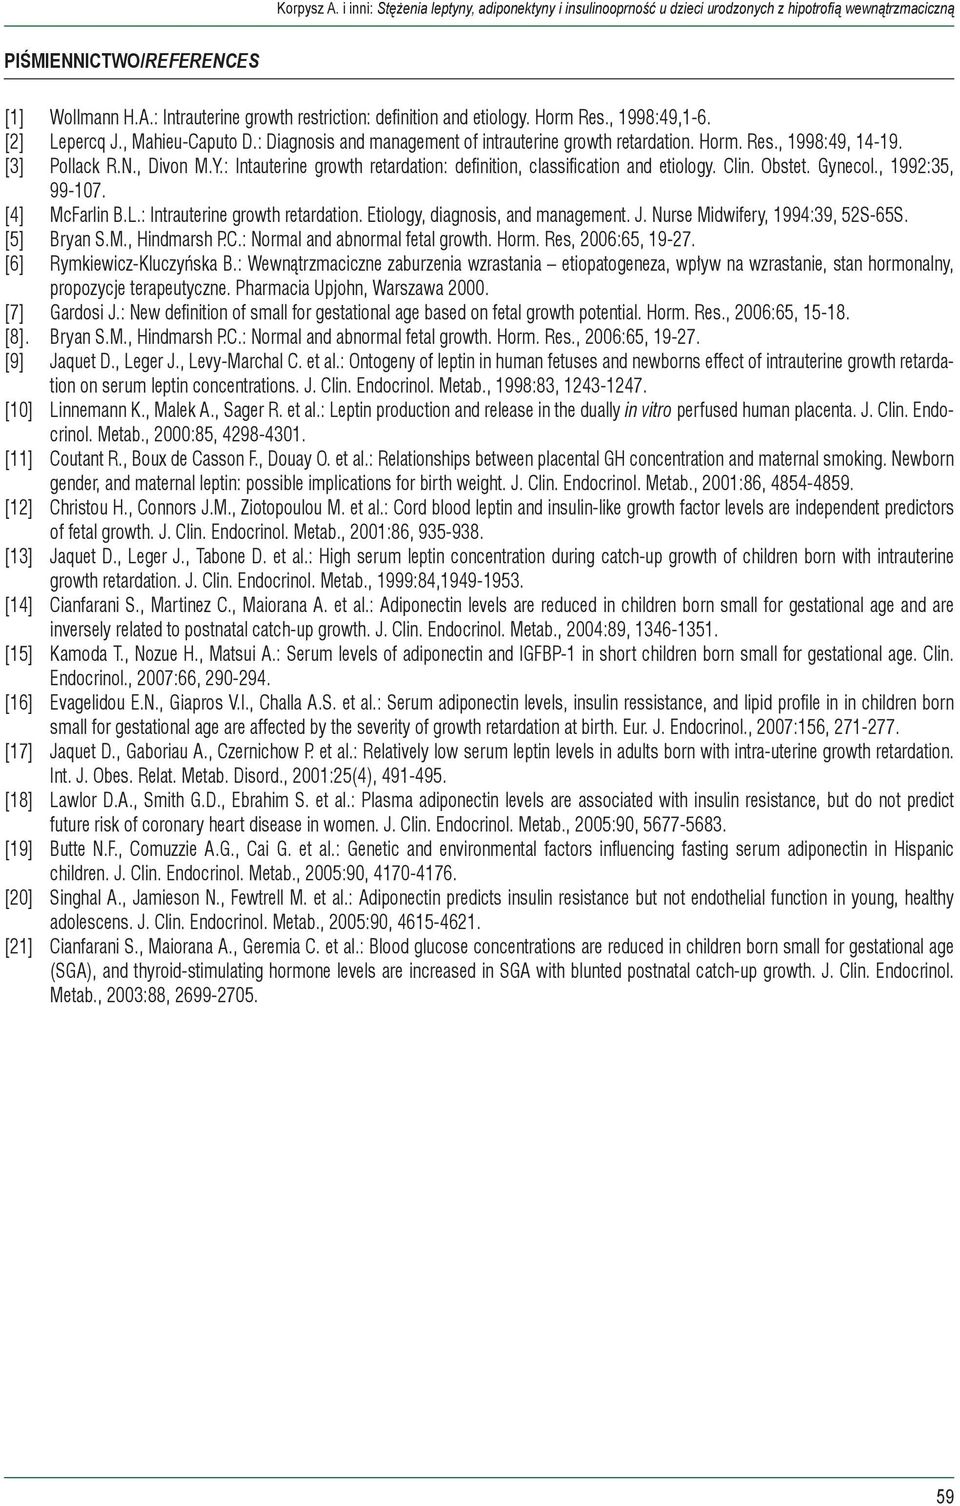 Obstet. Gynecol., 1992:35, 99-107. [4] McFarlin B.L.: Intrauterine growth retardation. Etiology, diagnosis, and management. J. Nurse Midwifery, 1994:39, 52S-65S. [5] Bryan S.M., Hindmarsh P.C.